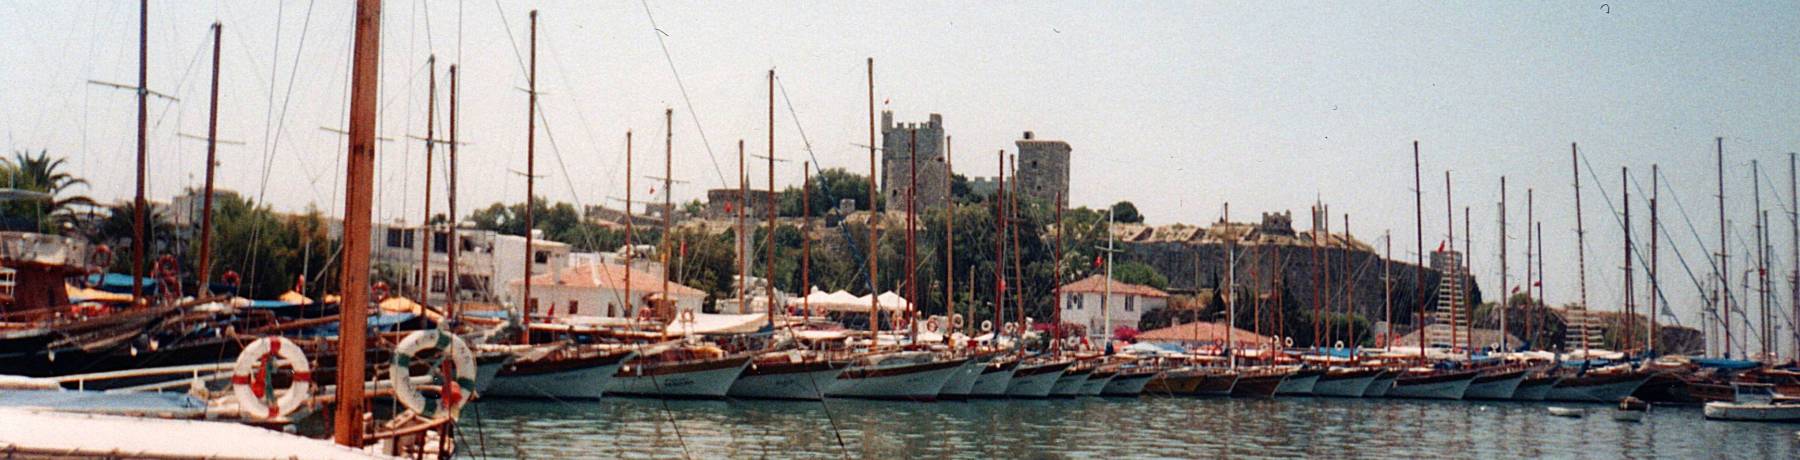 Harbor on the Greek island of Kos.